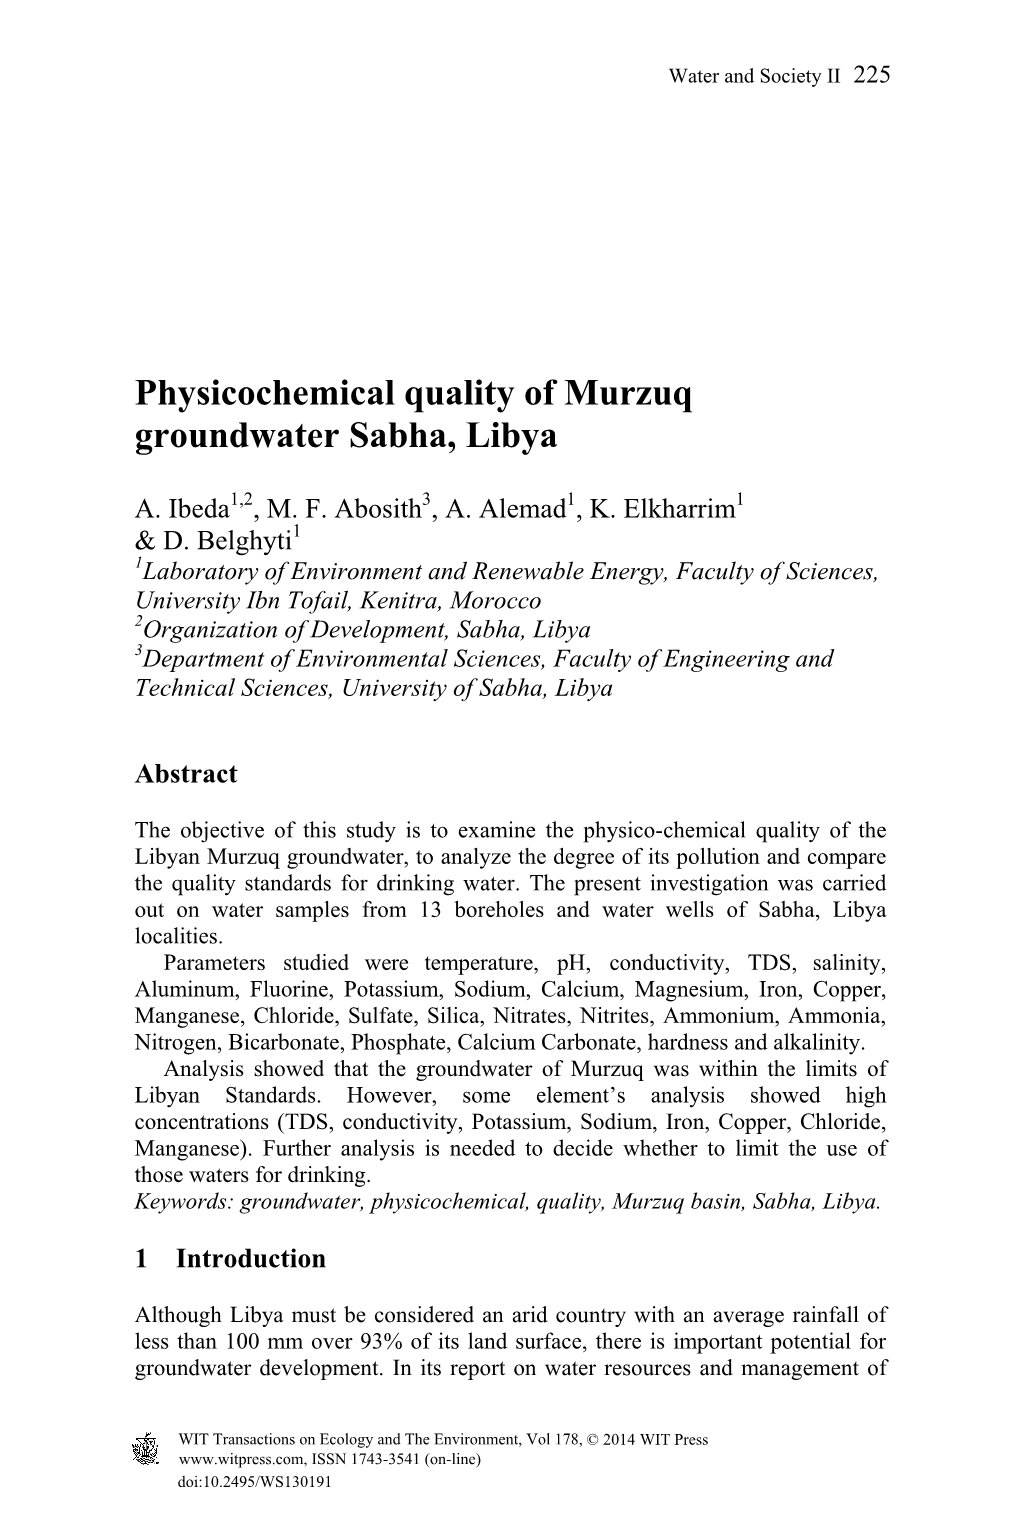 Physicochemical Quality of Murzuq Groundwater Sabha, Libya